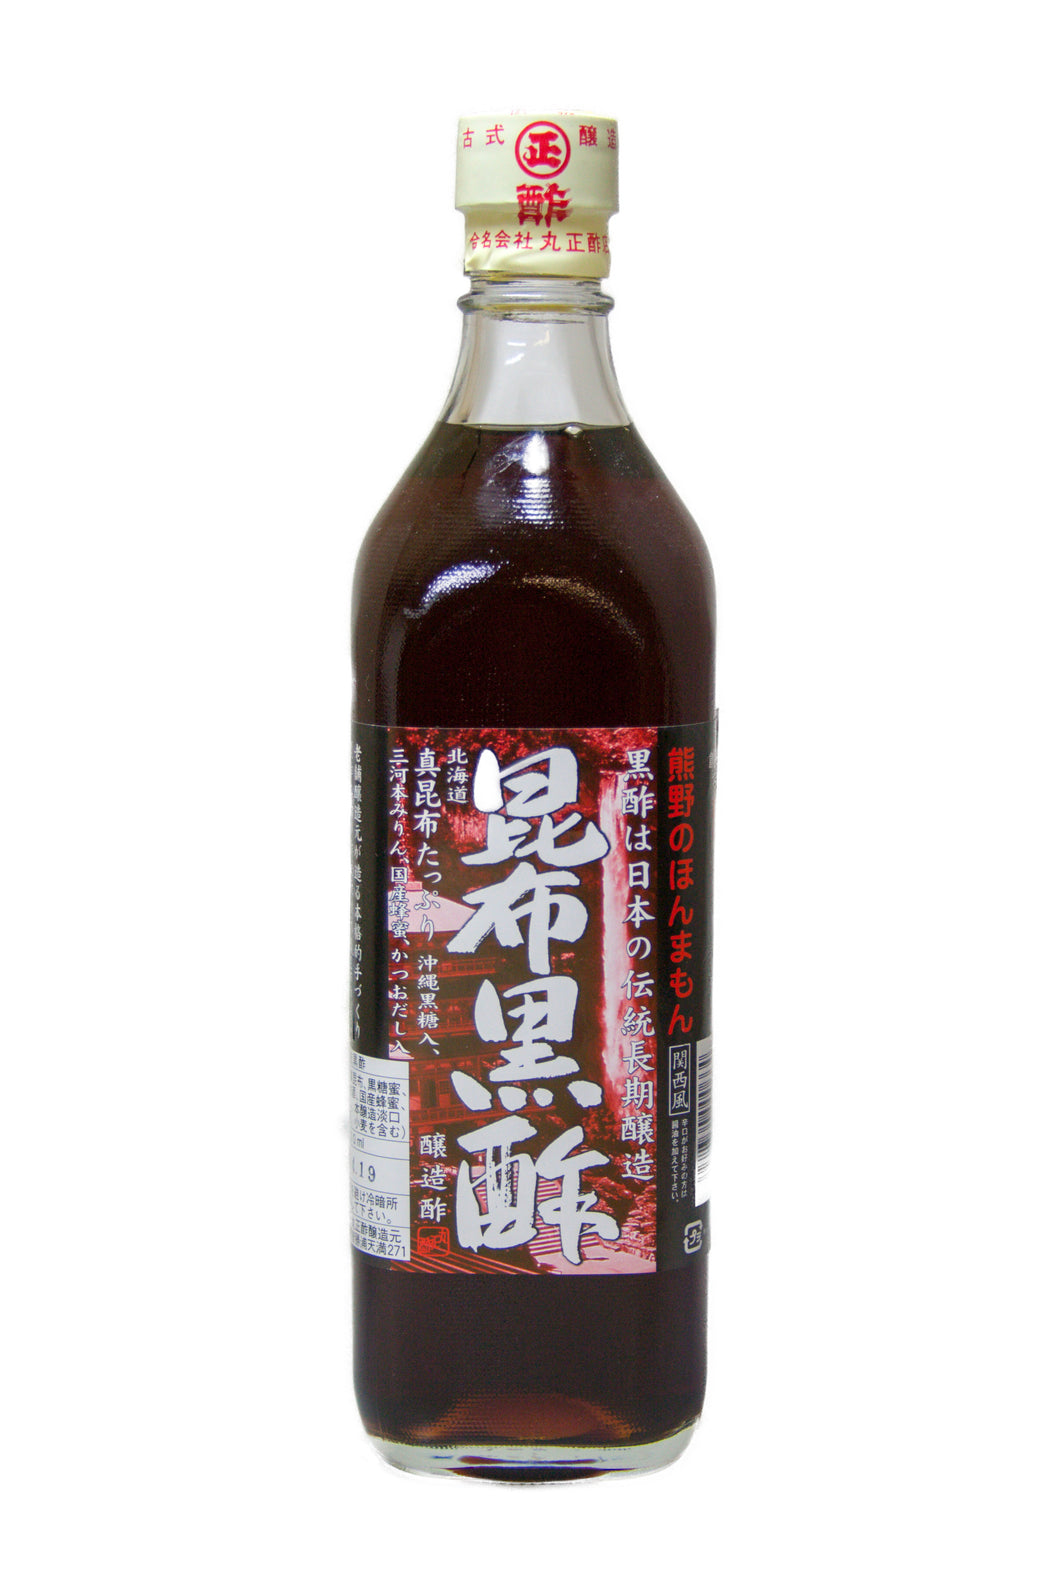 Black rice vinegar Kombu Kurozu manufactured in 1879